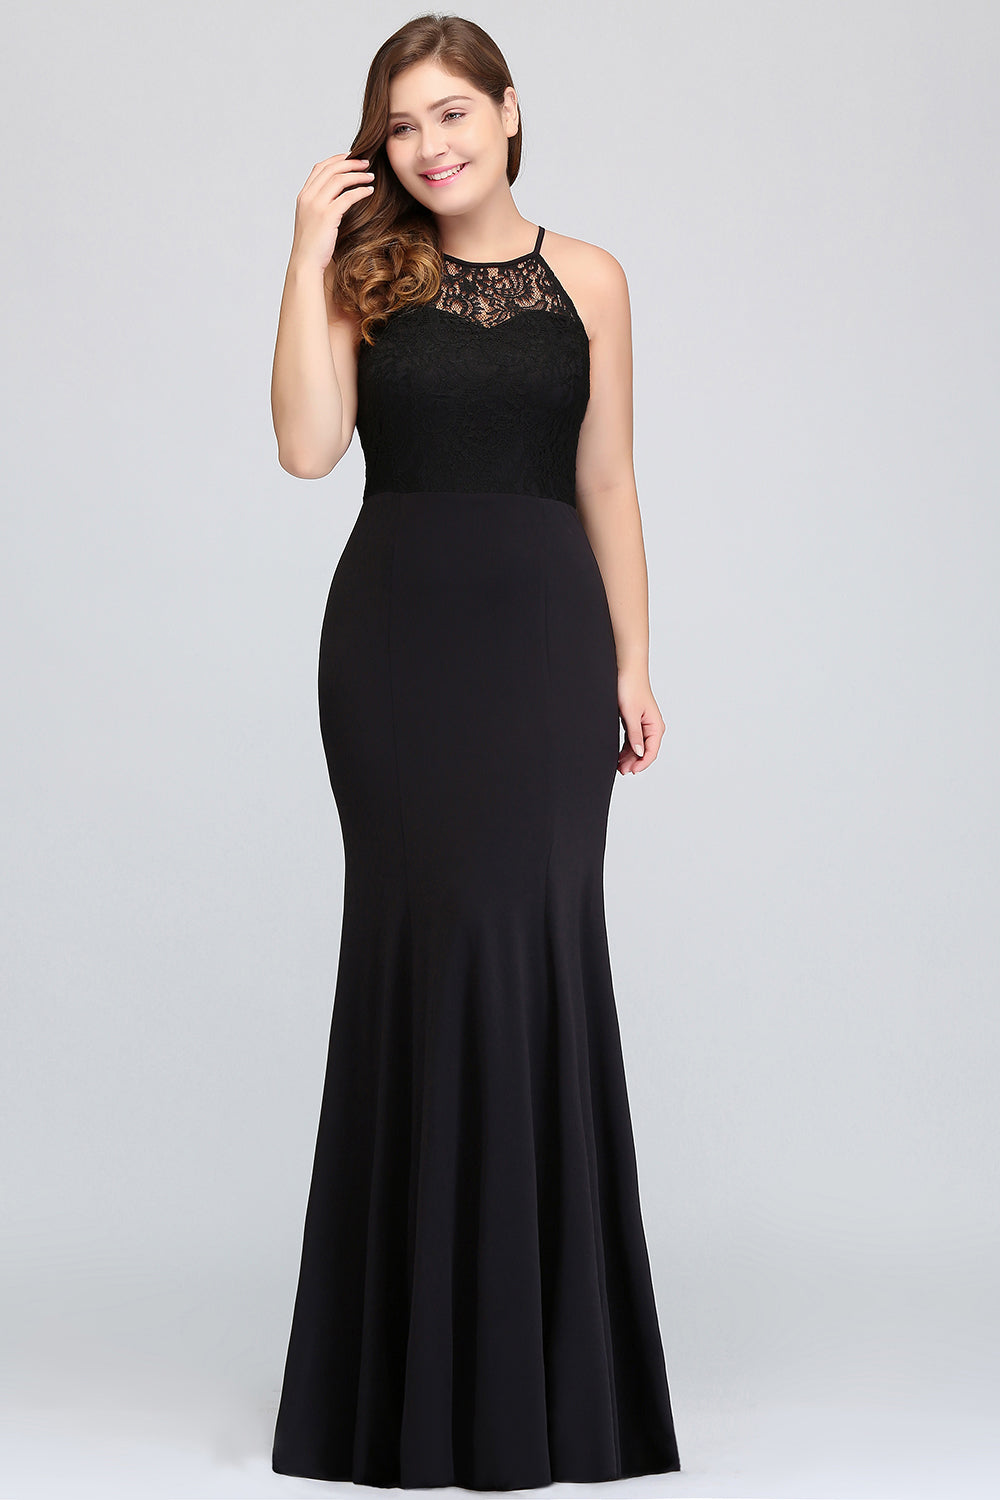 Plus Size Mermaid Jewel Lace Black Bridesmaid Dress Online-27dress